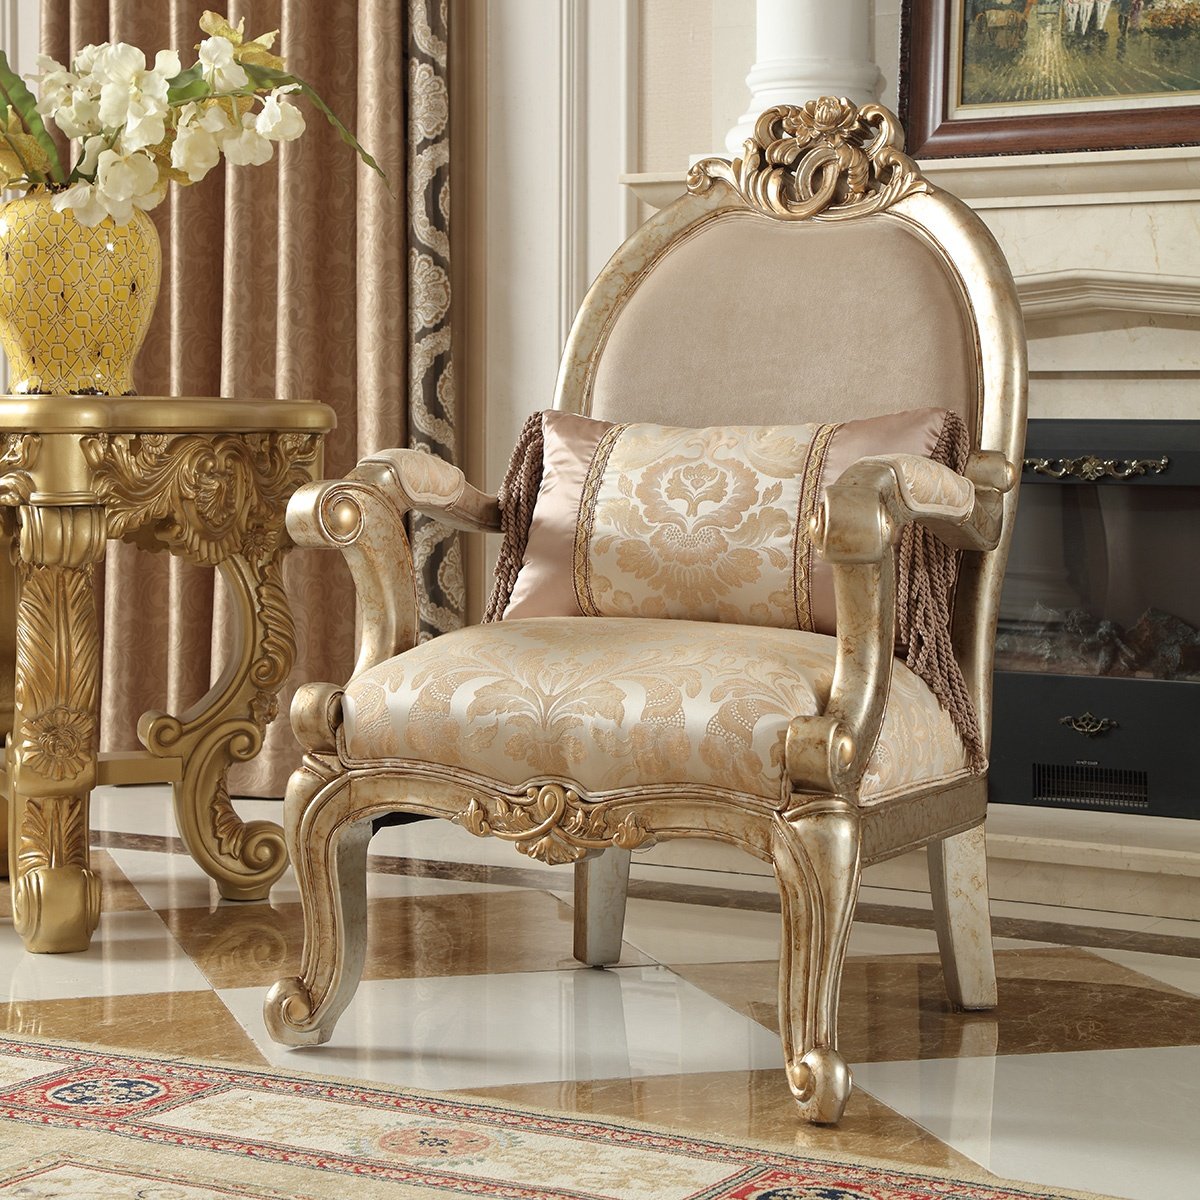 Fabric Chair in Champagne Metallic Gold & Silver Blend Finish C2663 European